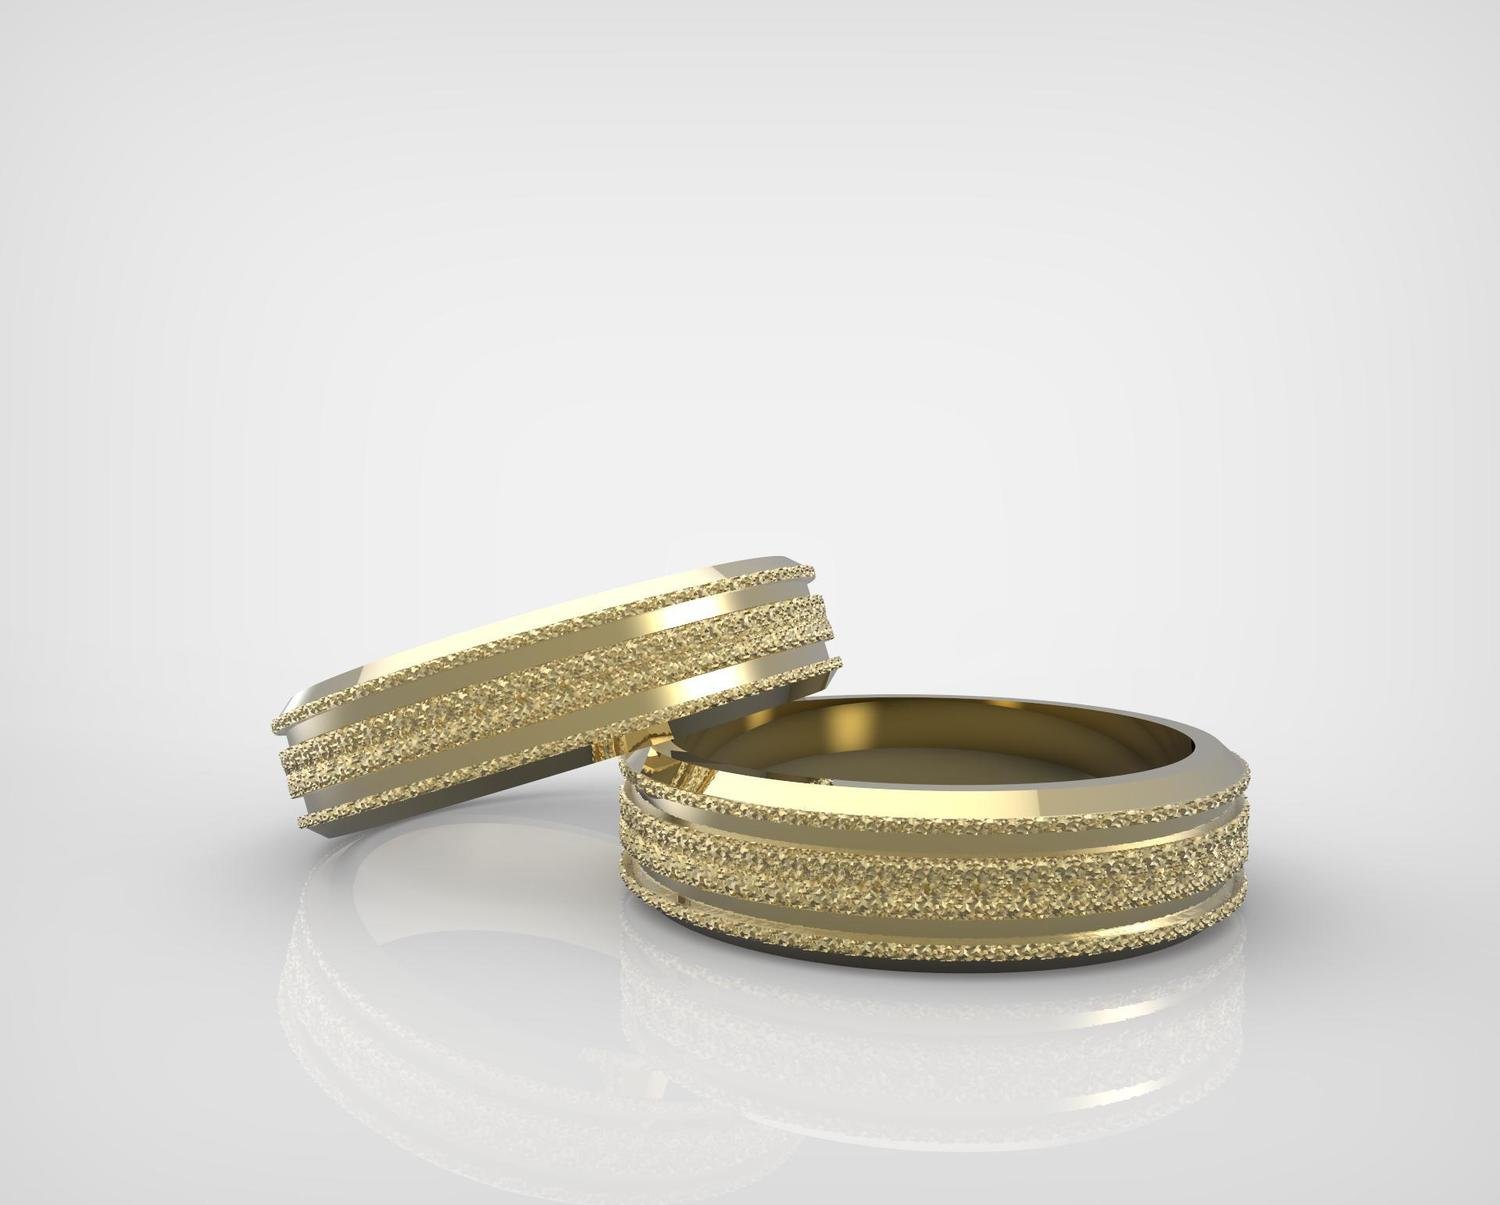 3D CAD Model of Wedding Ring